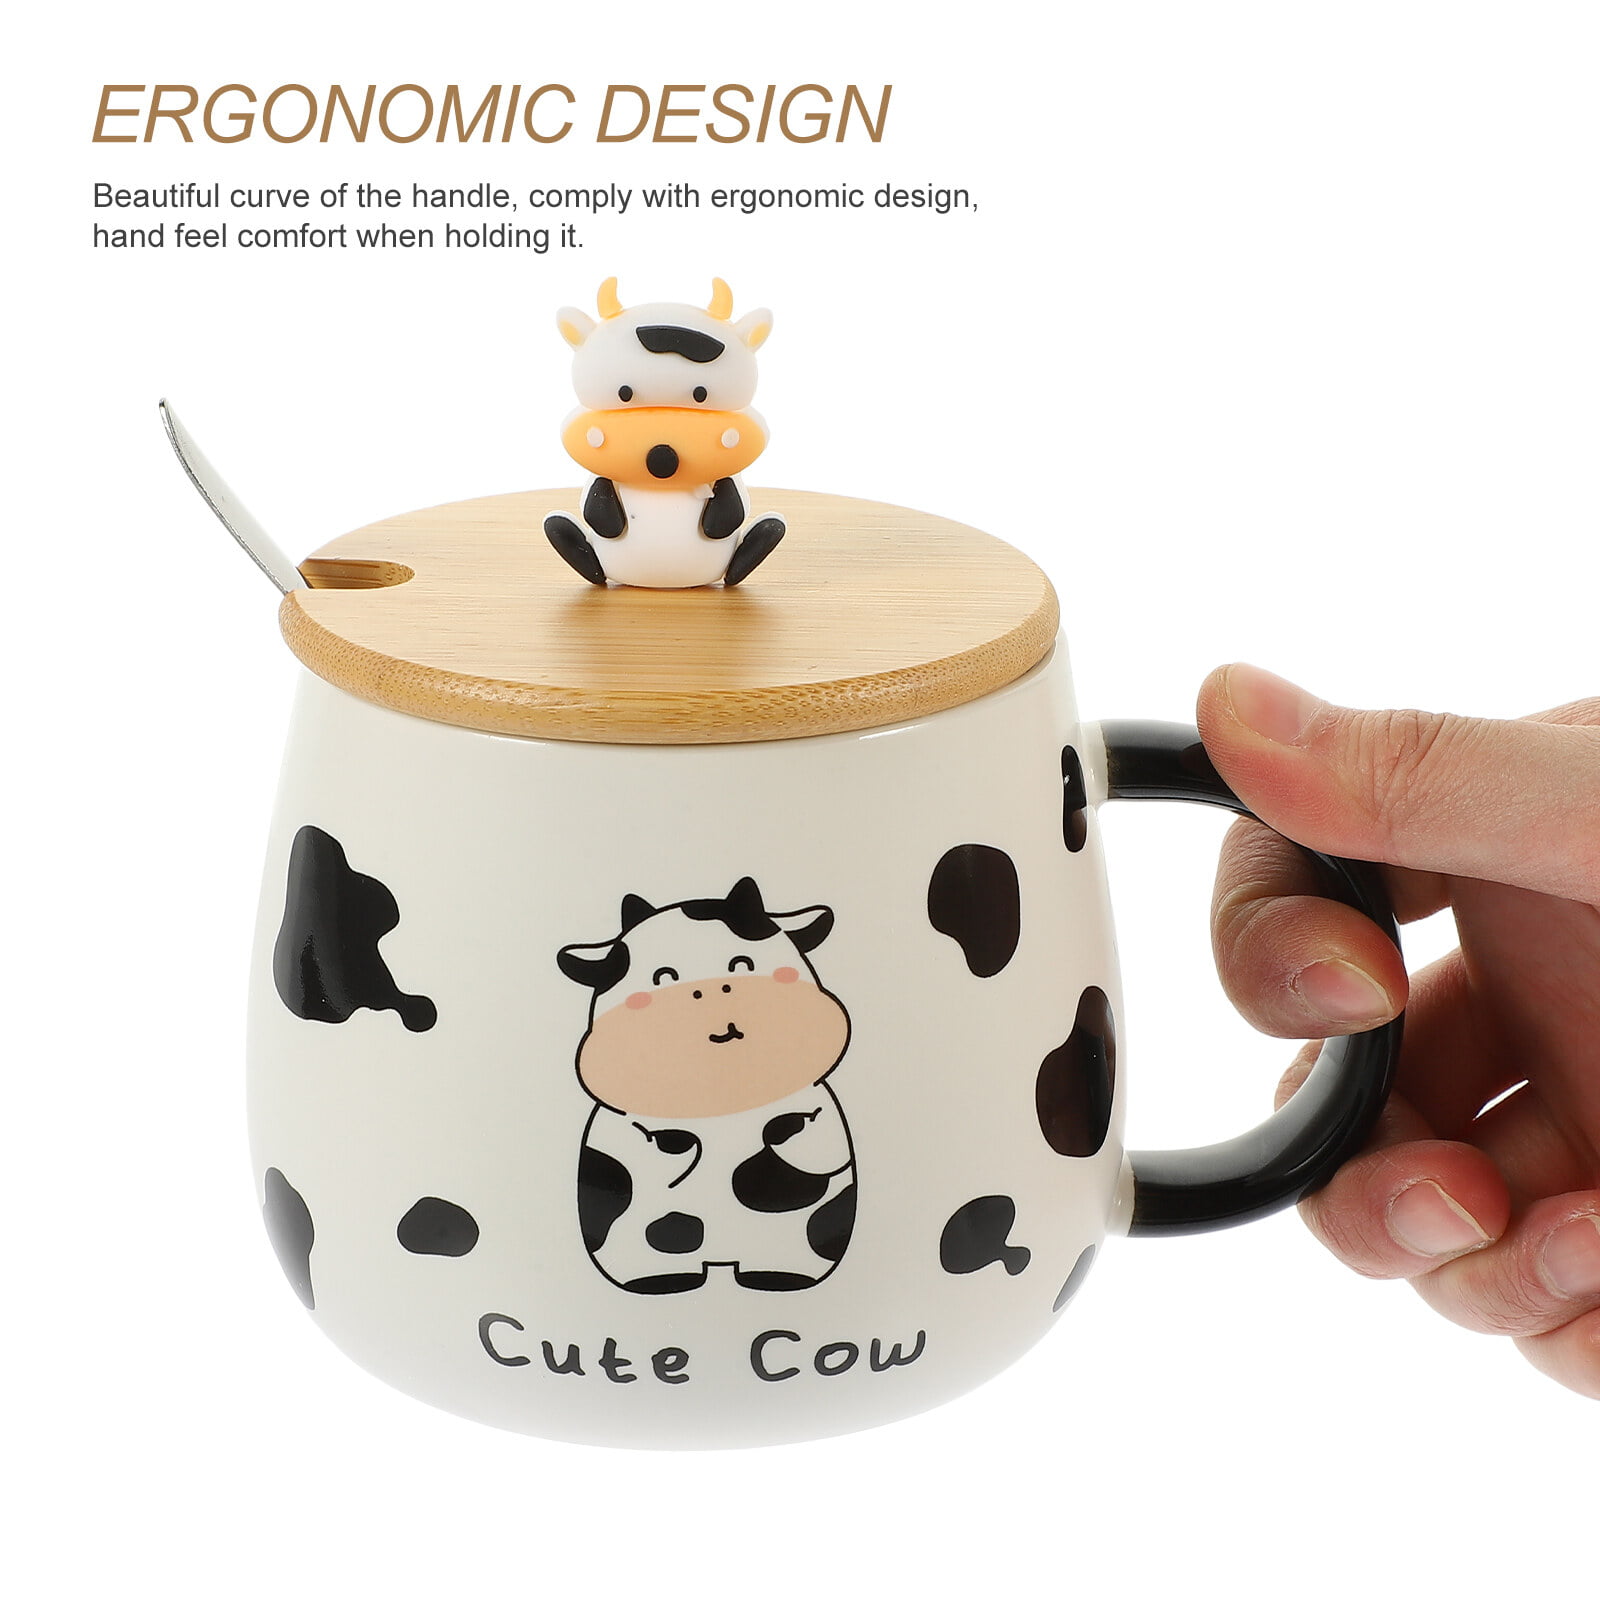 Funny Green Frog Mug Ceramics Mug Cute Kids Cartoon Cup Creativity Milk Cup  350ml Coffee Cup